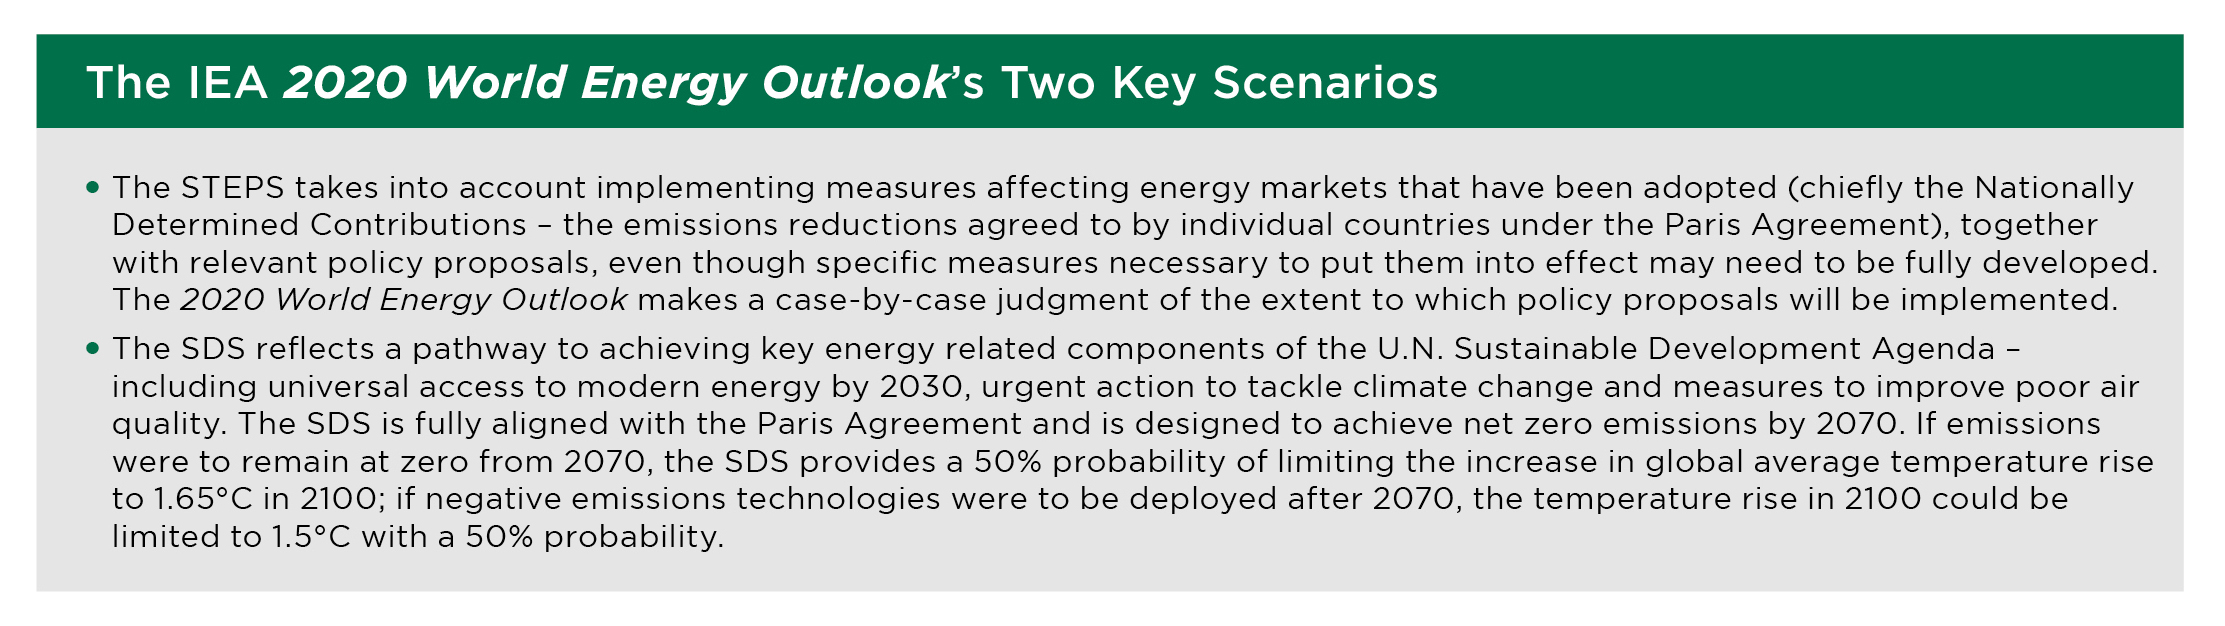 2020_IEA World Energy Outlook Key Scenarios